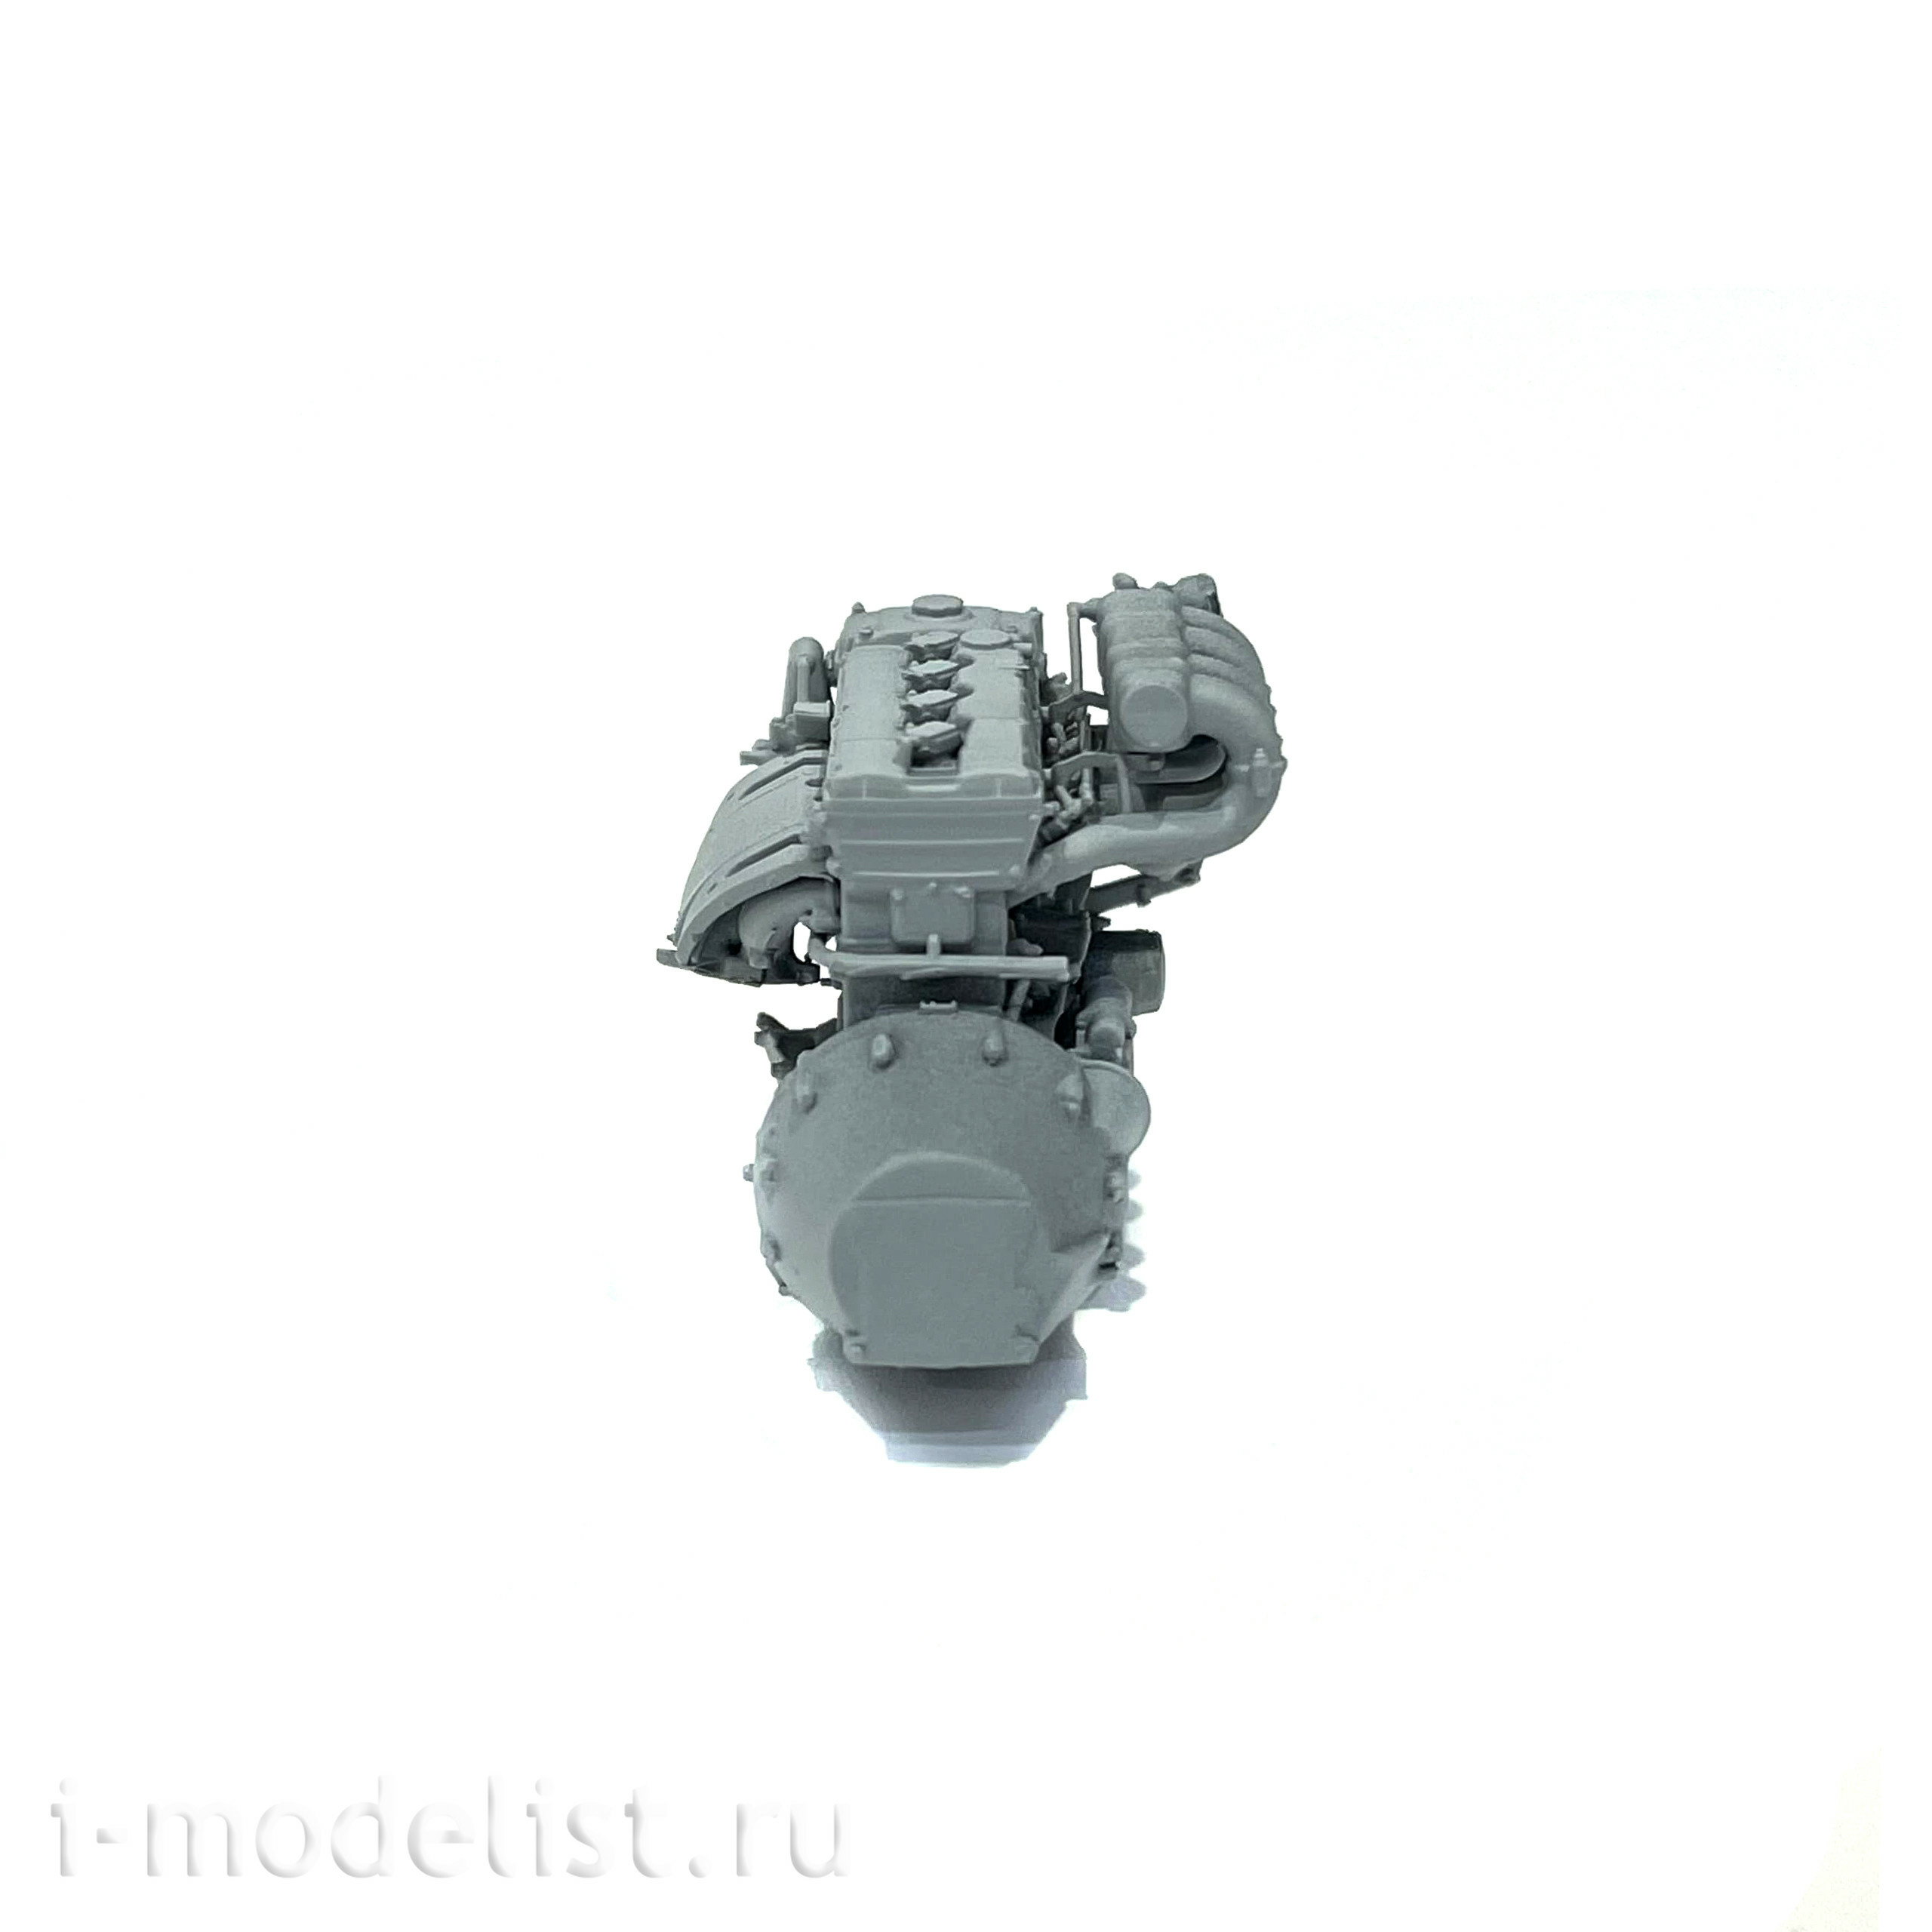 Im35056 Imodelist 1/35 Двигатель ЗМЗ-409 для 